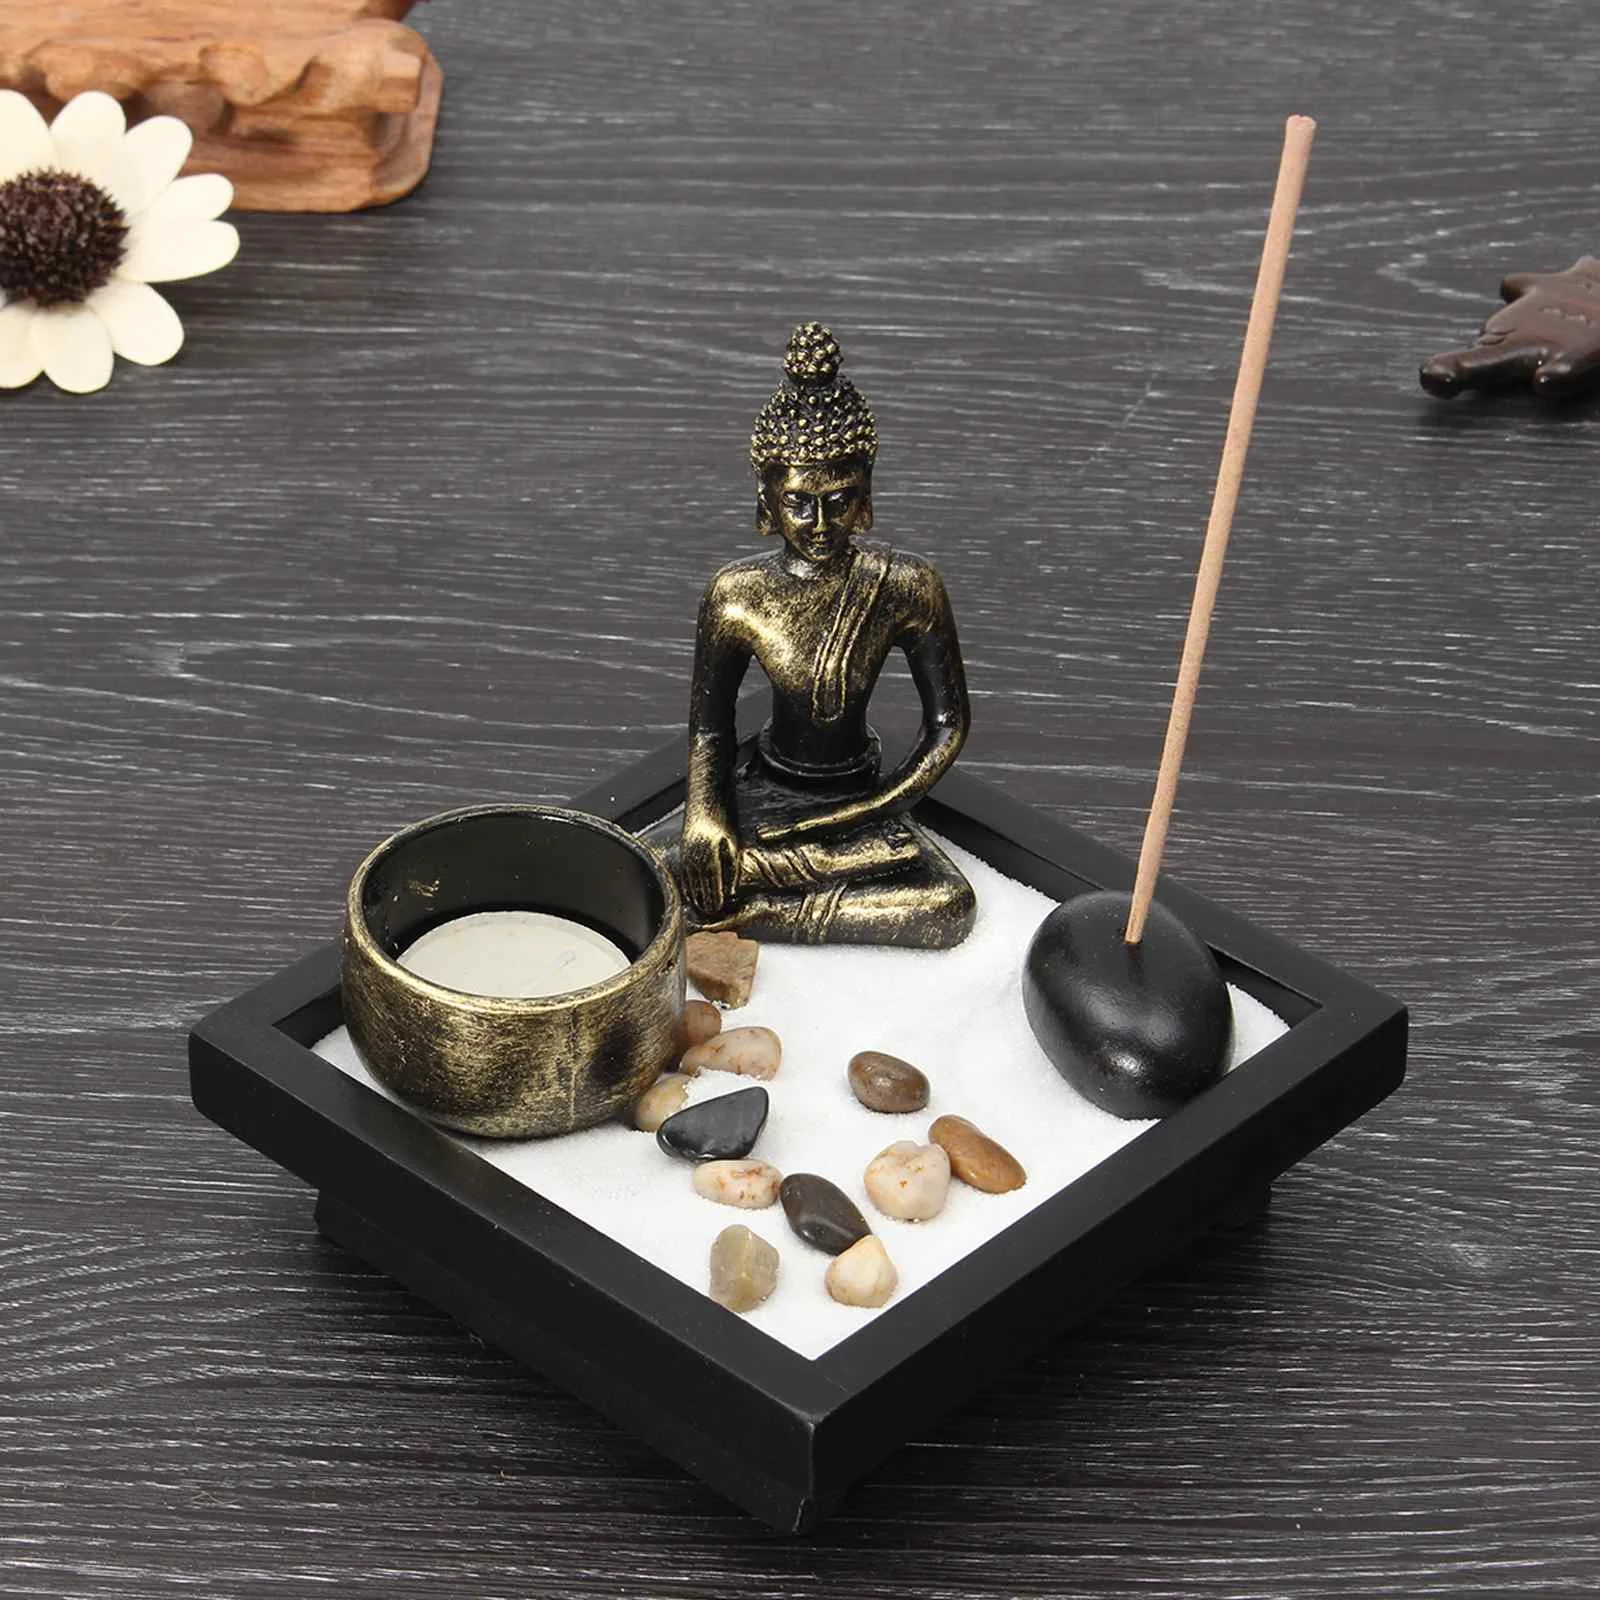 Desk Garden Buddha Statue with Tealight Incense Holder Rocks Sand Home Decor